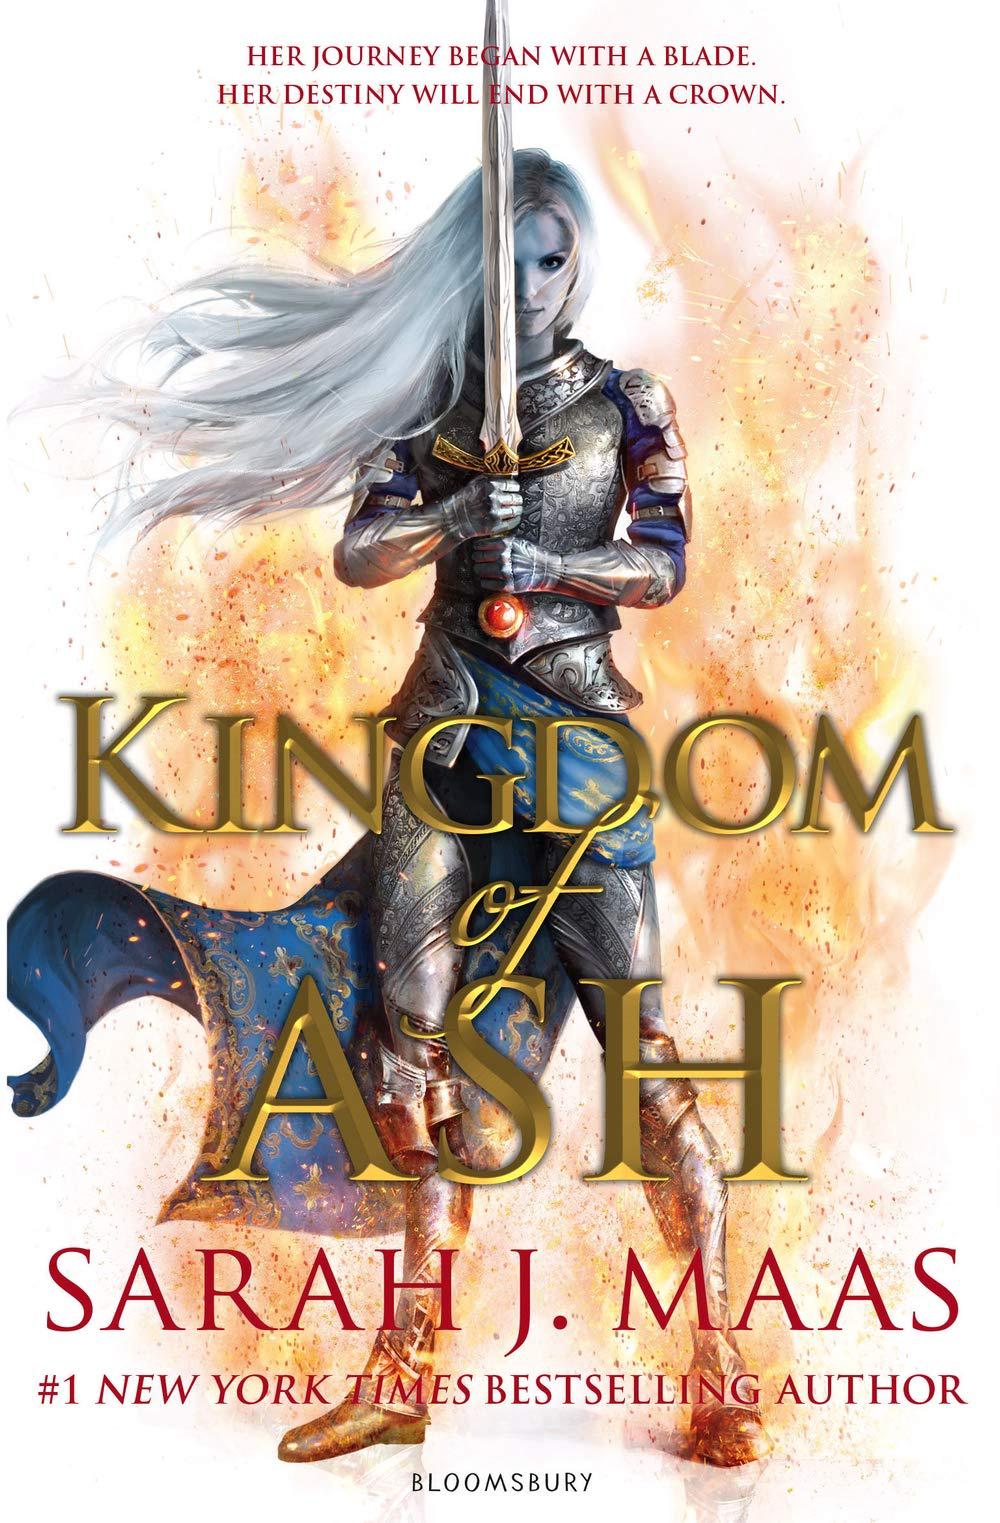 Kingdom of Ash: THE INTERNATIONAL SENSATION par Sarah J. Maas (anglais) livre de poche - Photo 1 sur 1